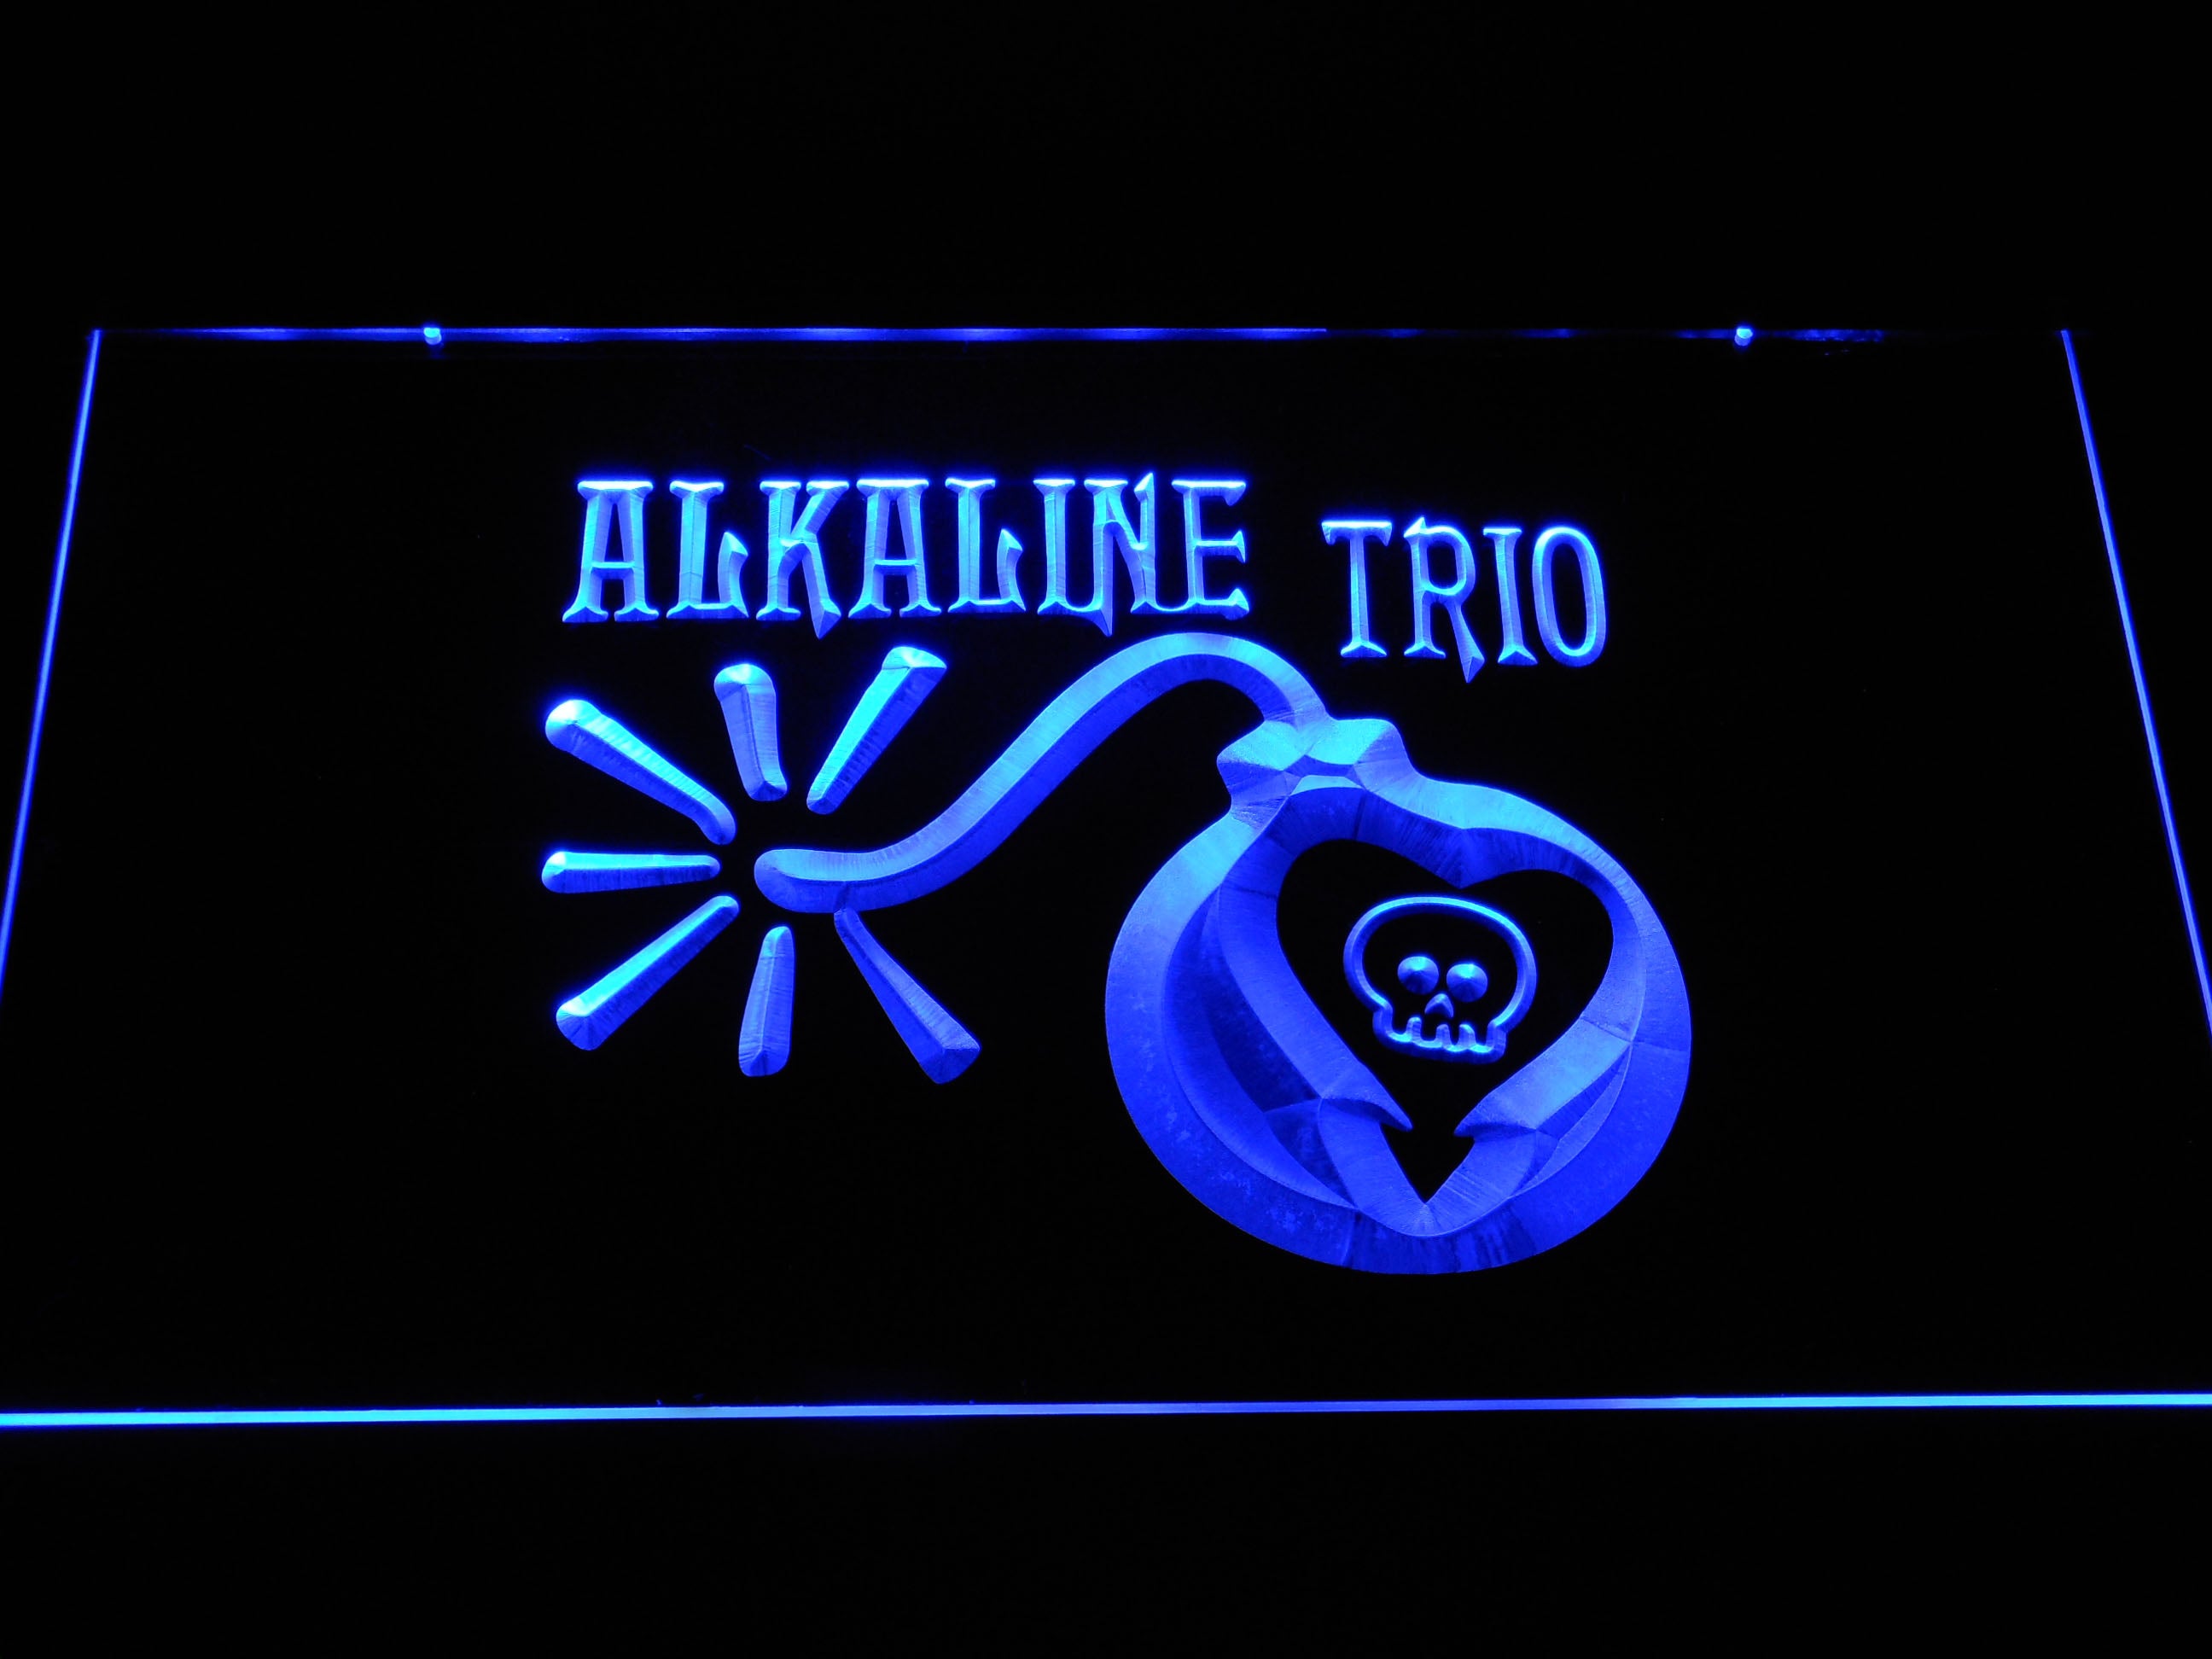 Alkaline Trio Punk Rock Band LED Neon Sign